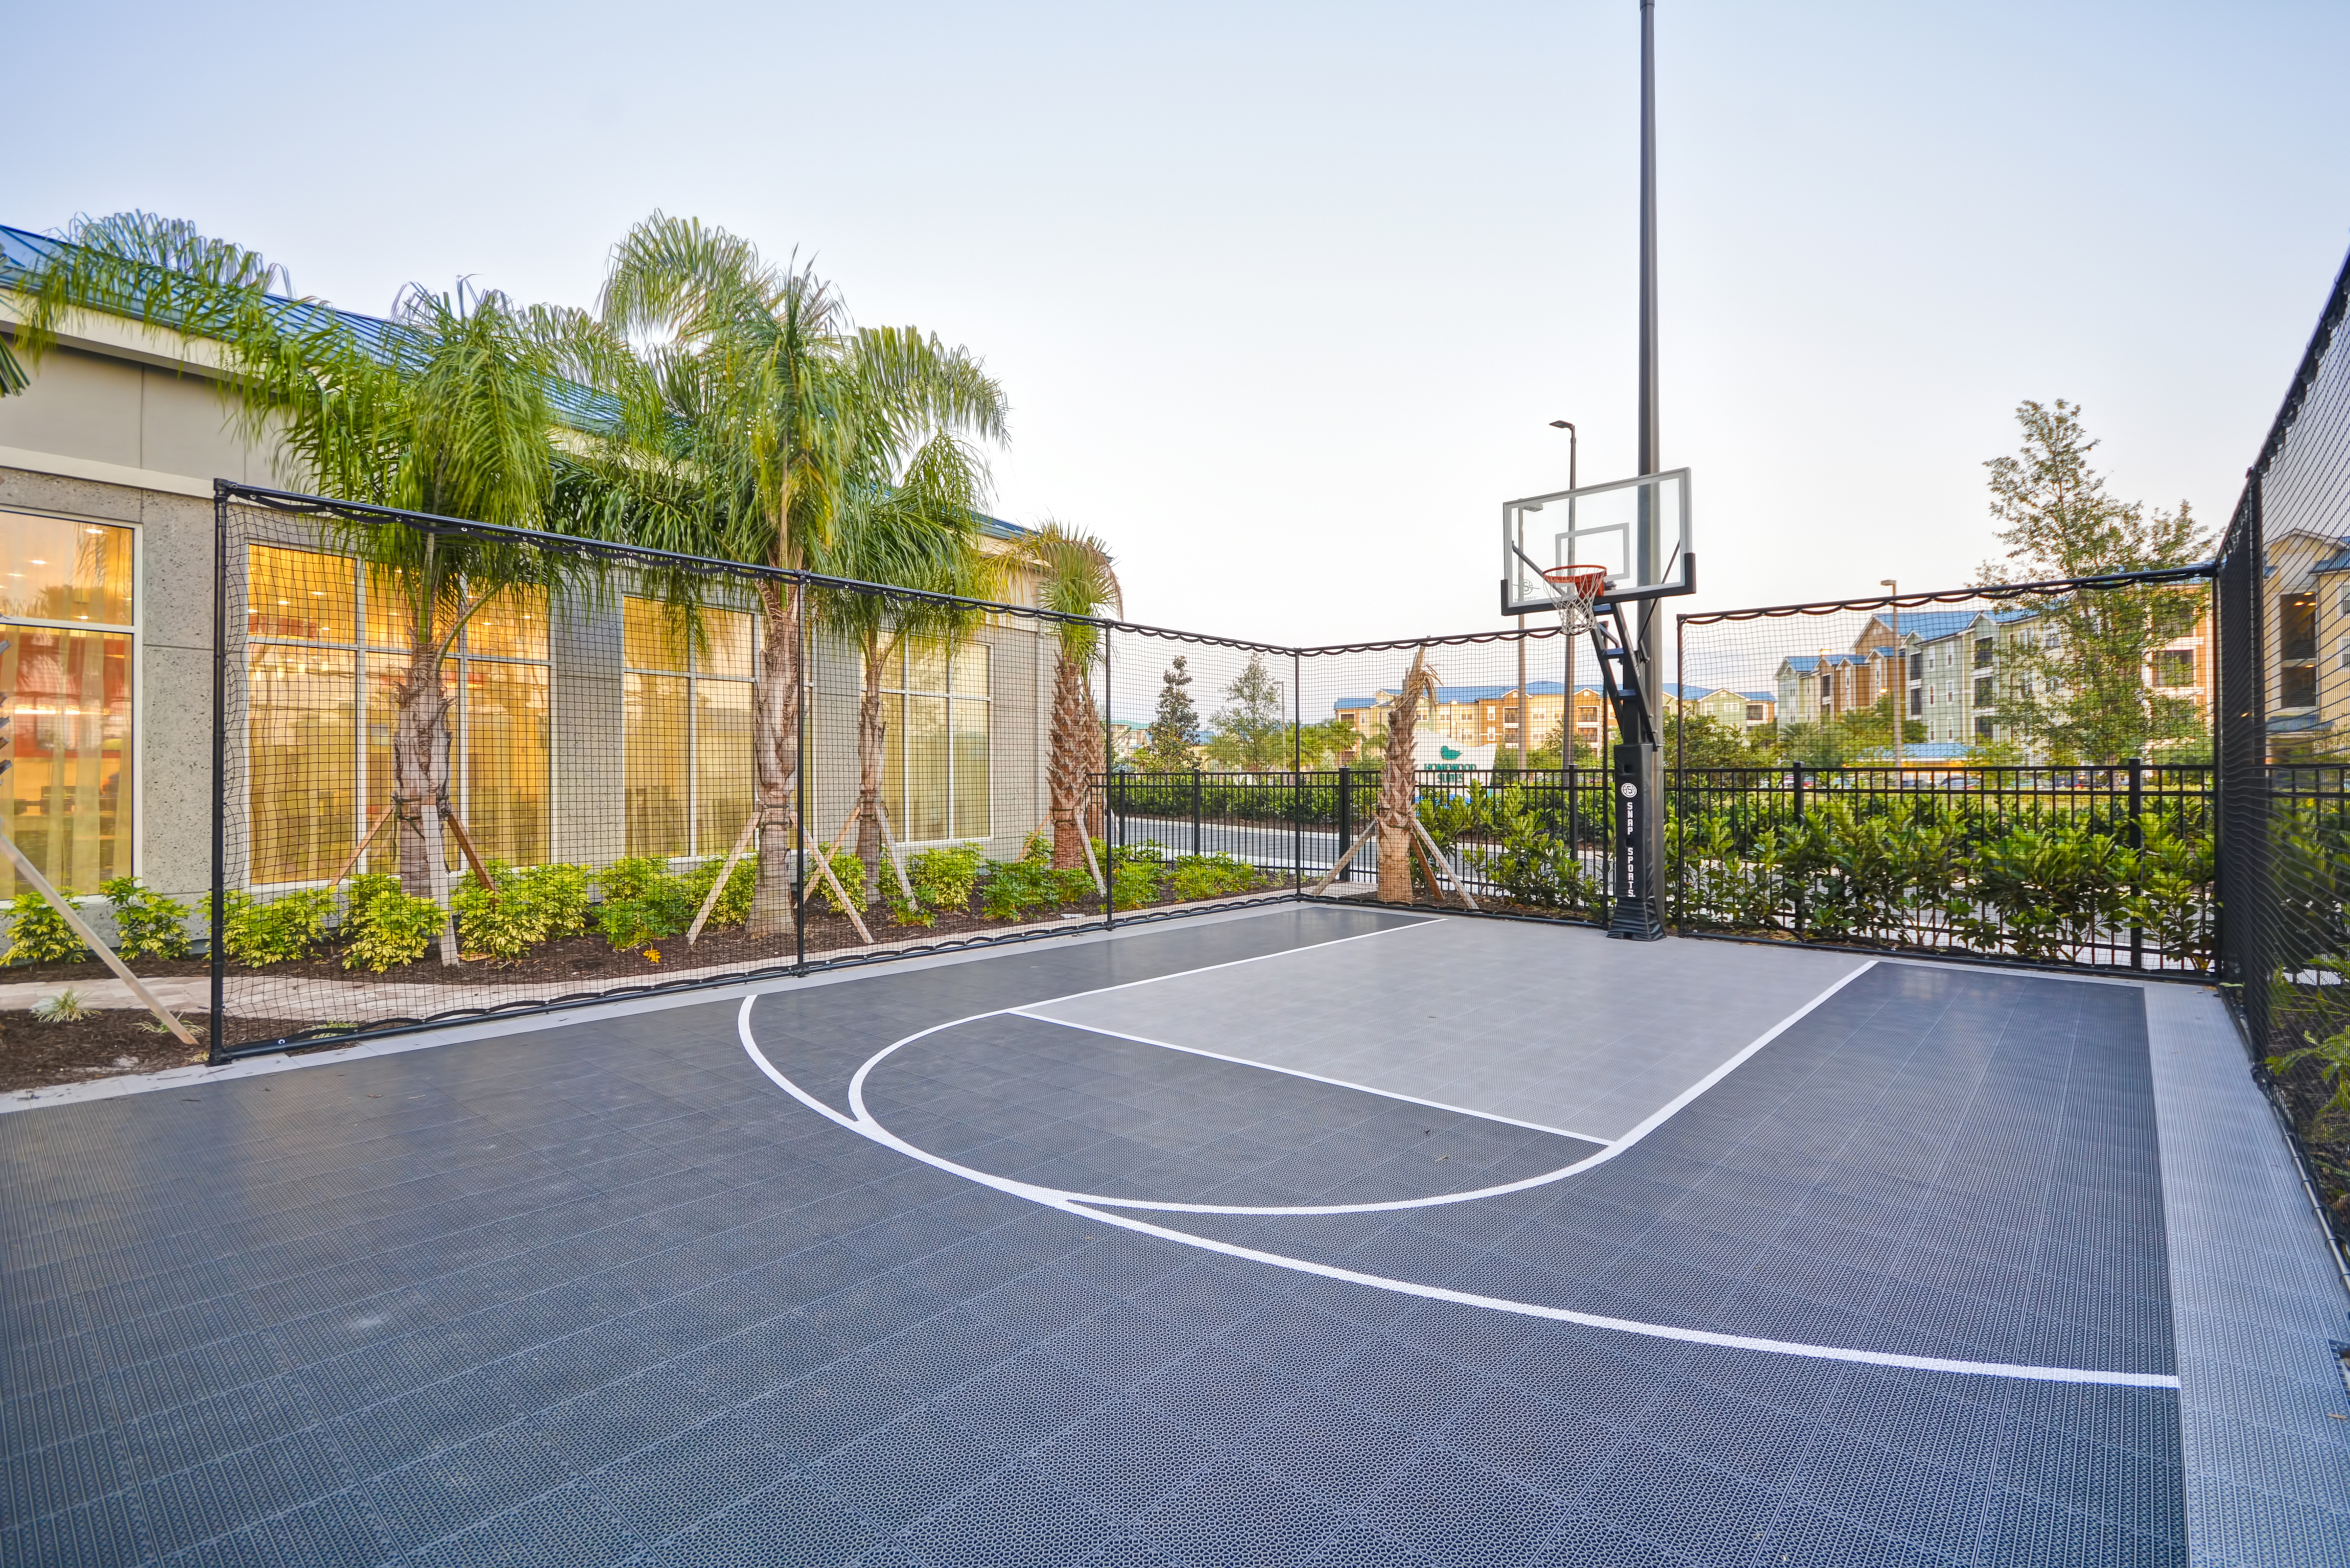 Homewood Suites by Hilton Orlando Theme Parks - Basketball Court